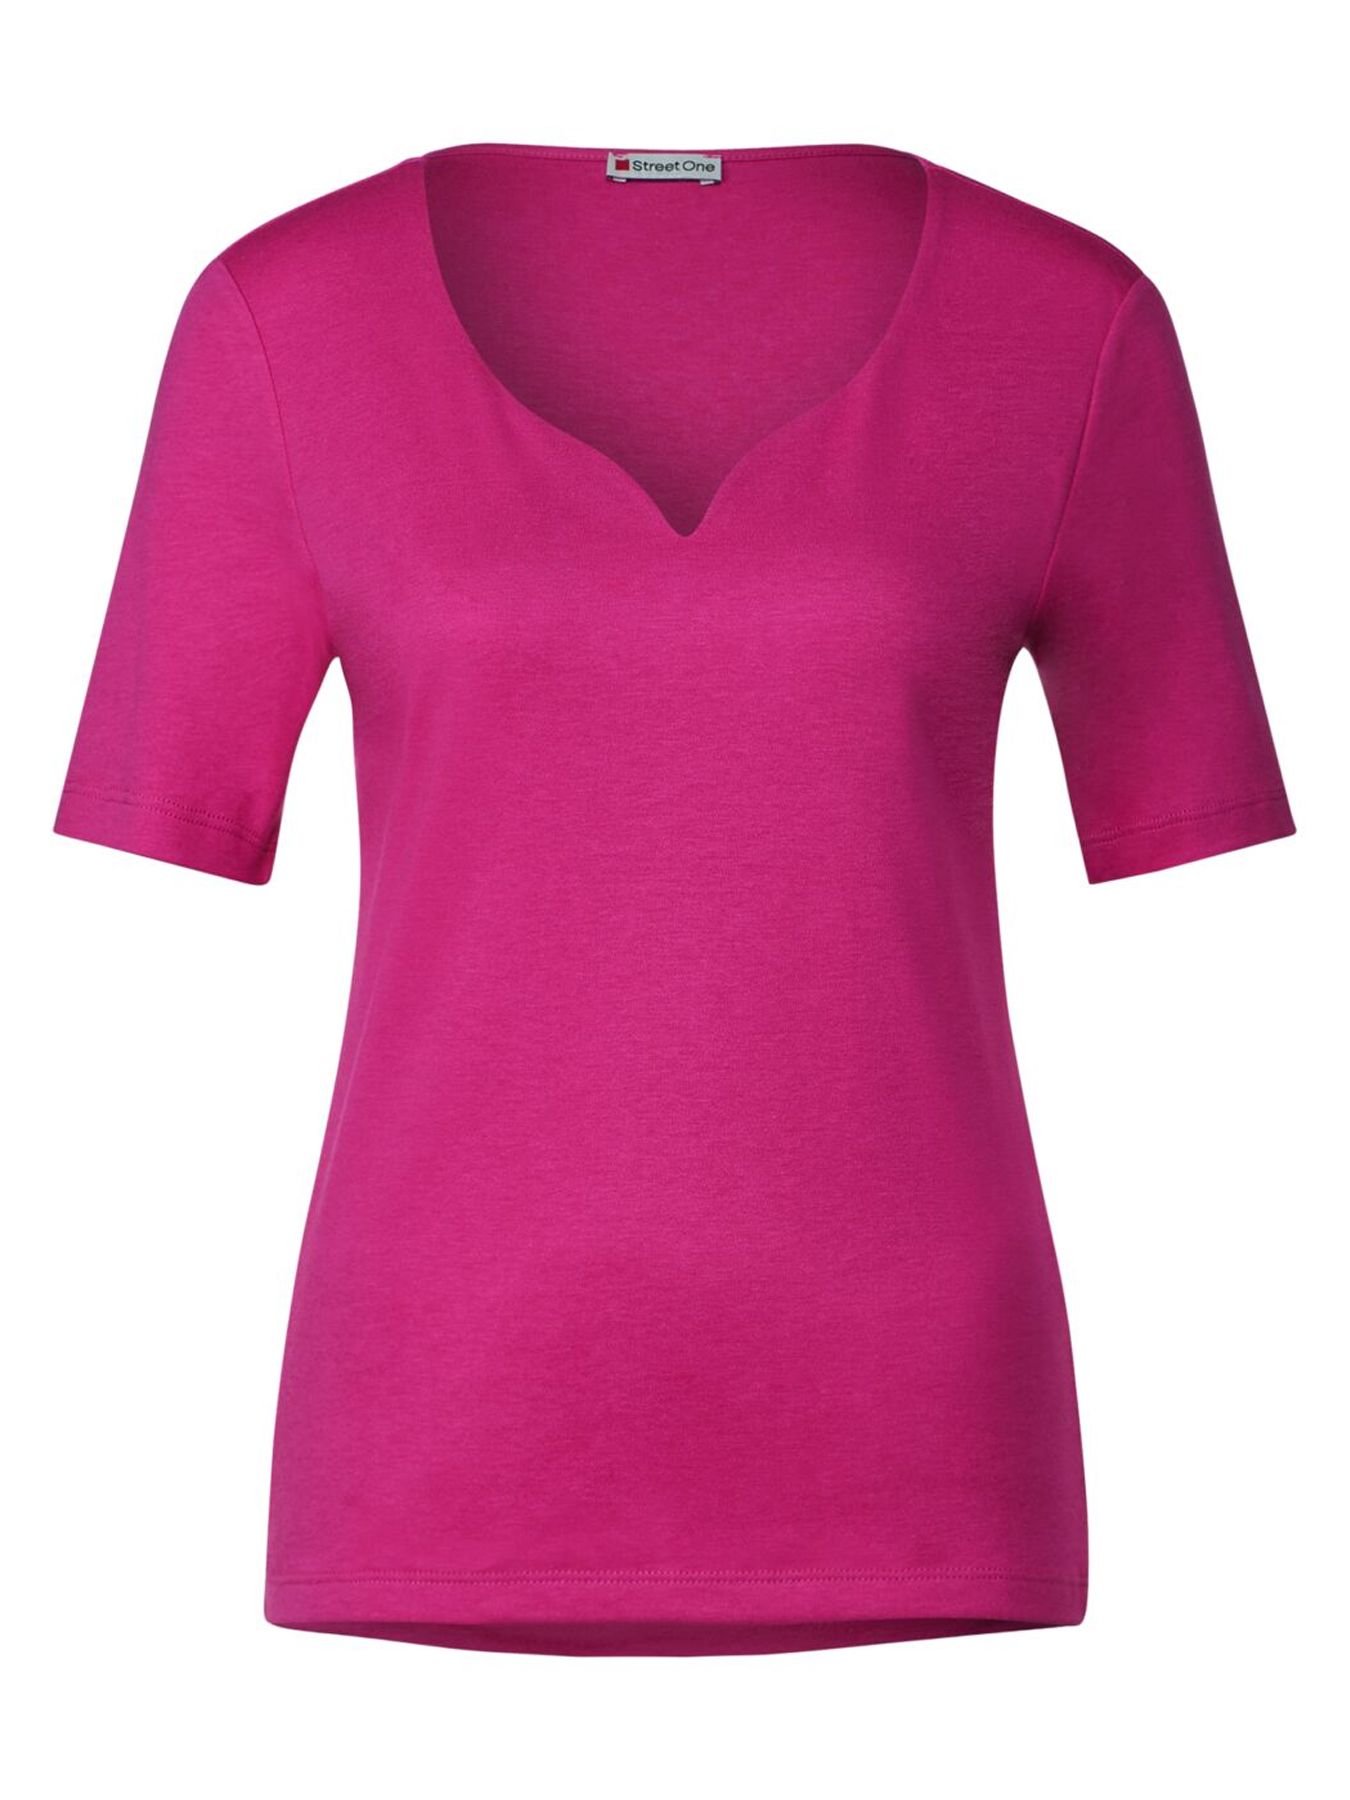 Street-One A321277 QR shirt w.heart neckline s magnolia pink 00108040-EKA19000200000448